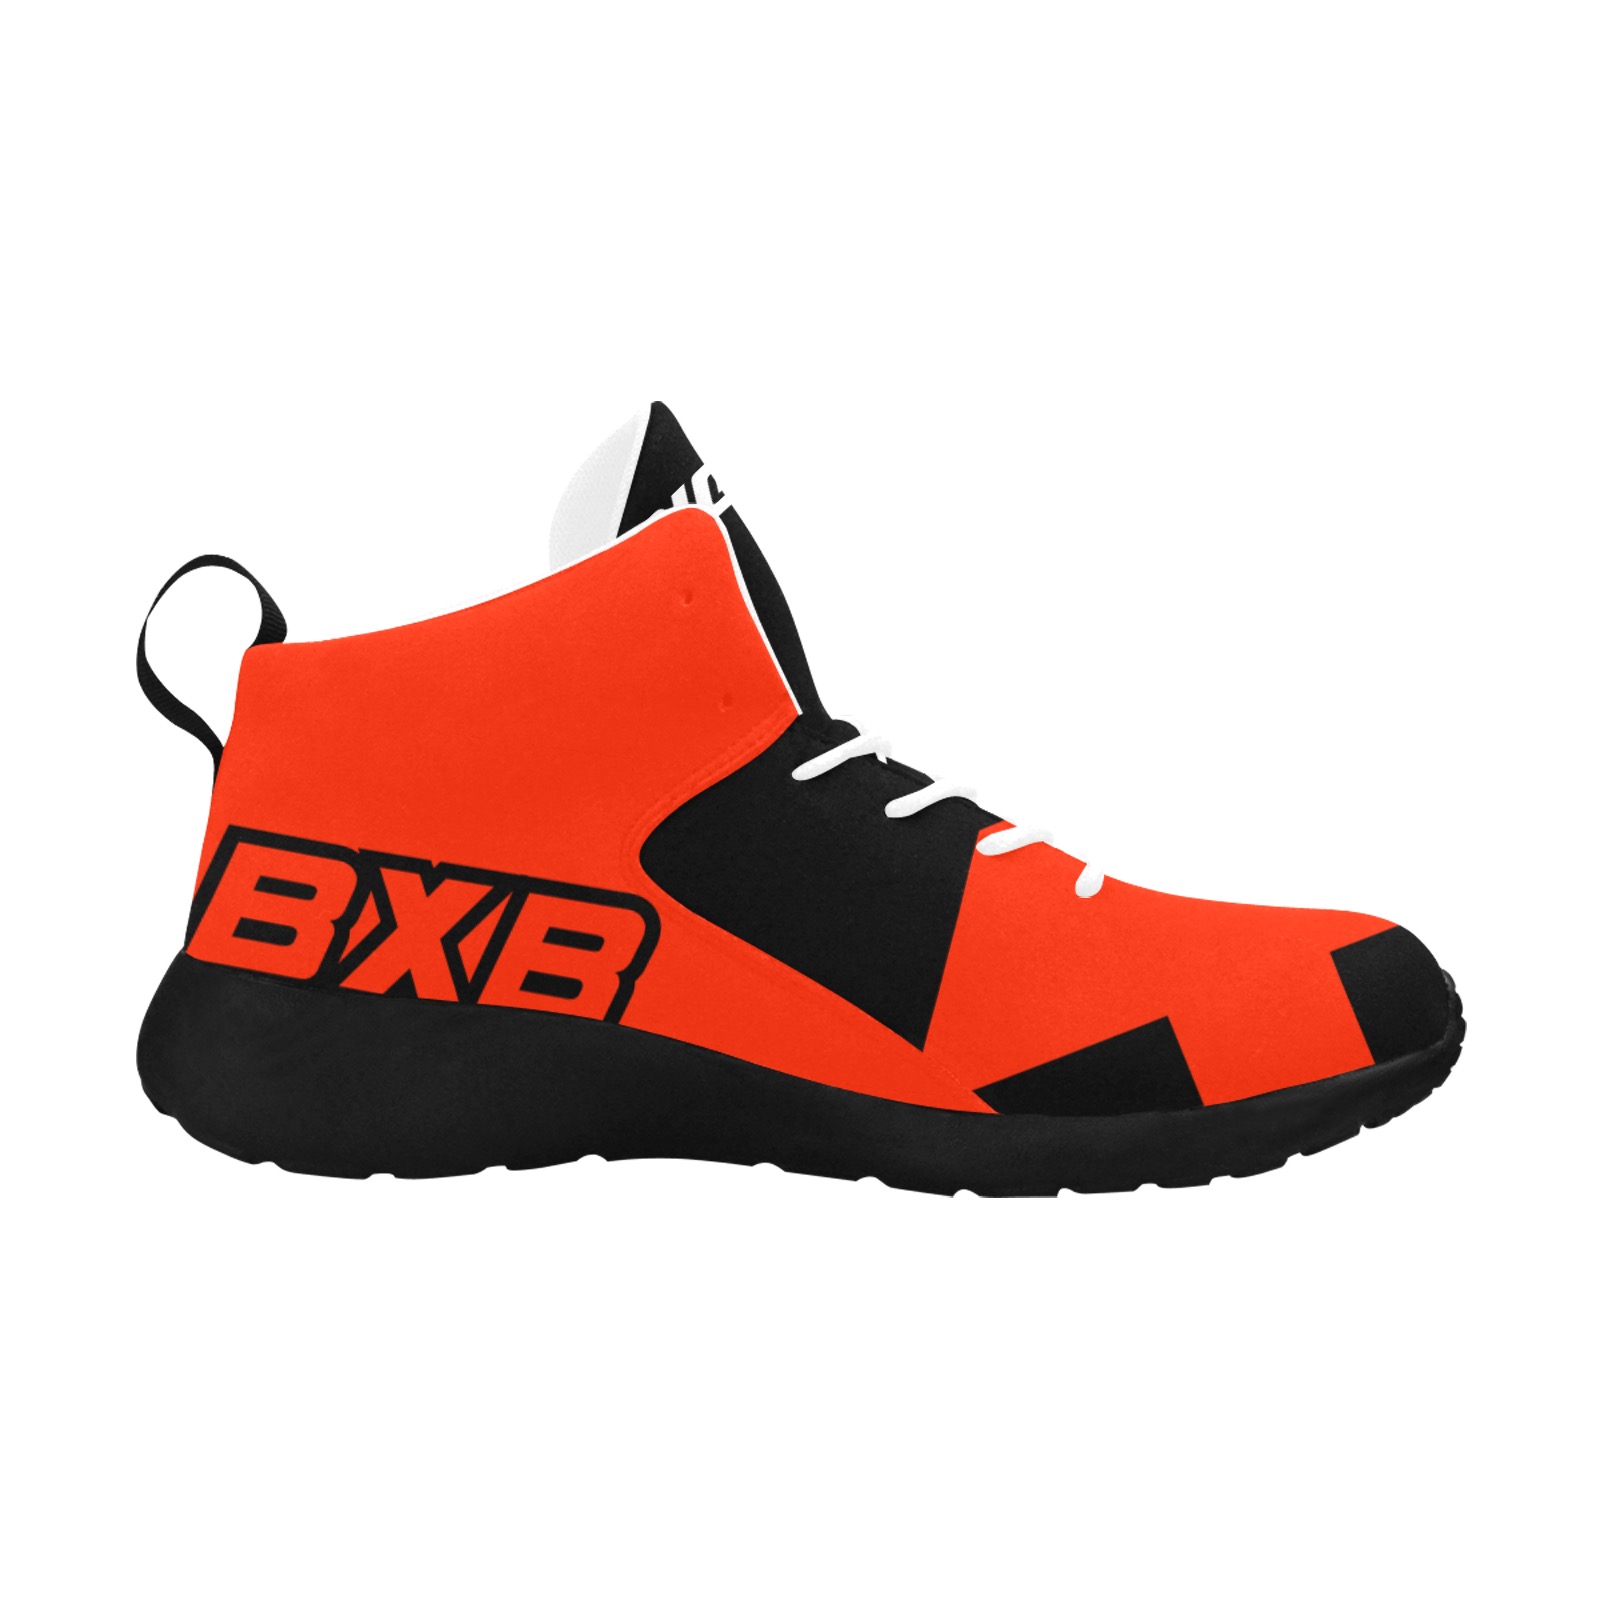 BXB MIDS RAMBO RED Men's Chukka Training Shoes (Model 57502)